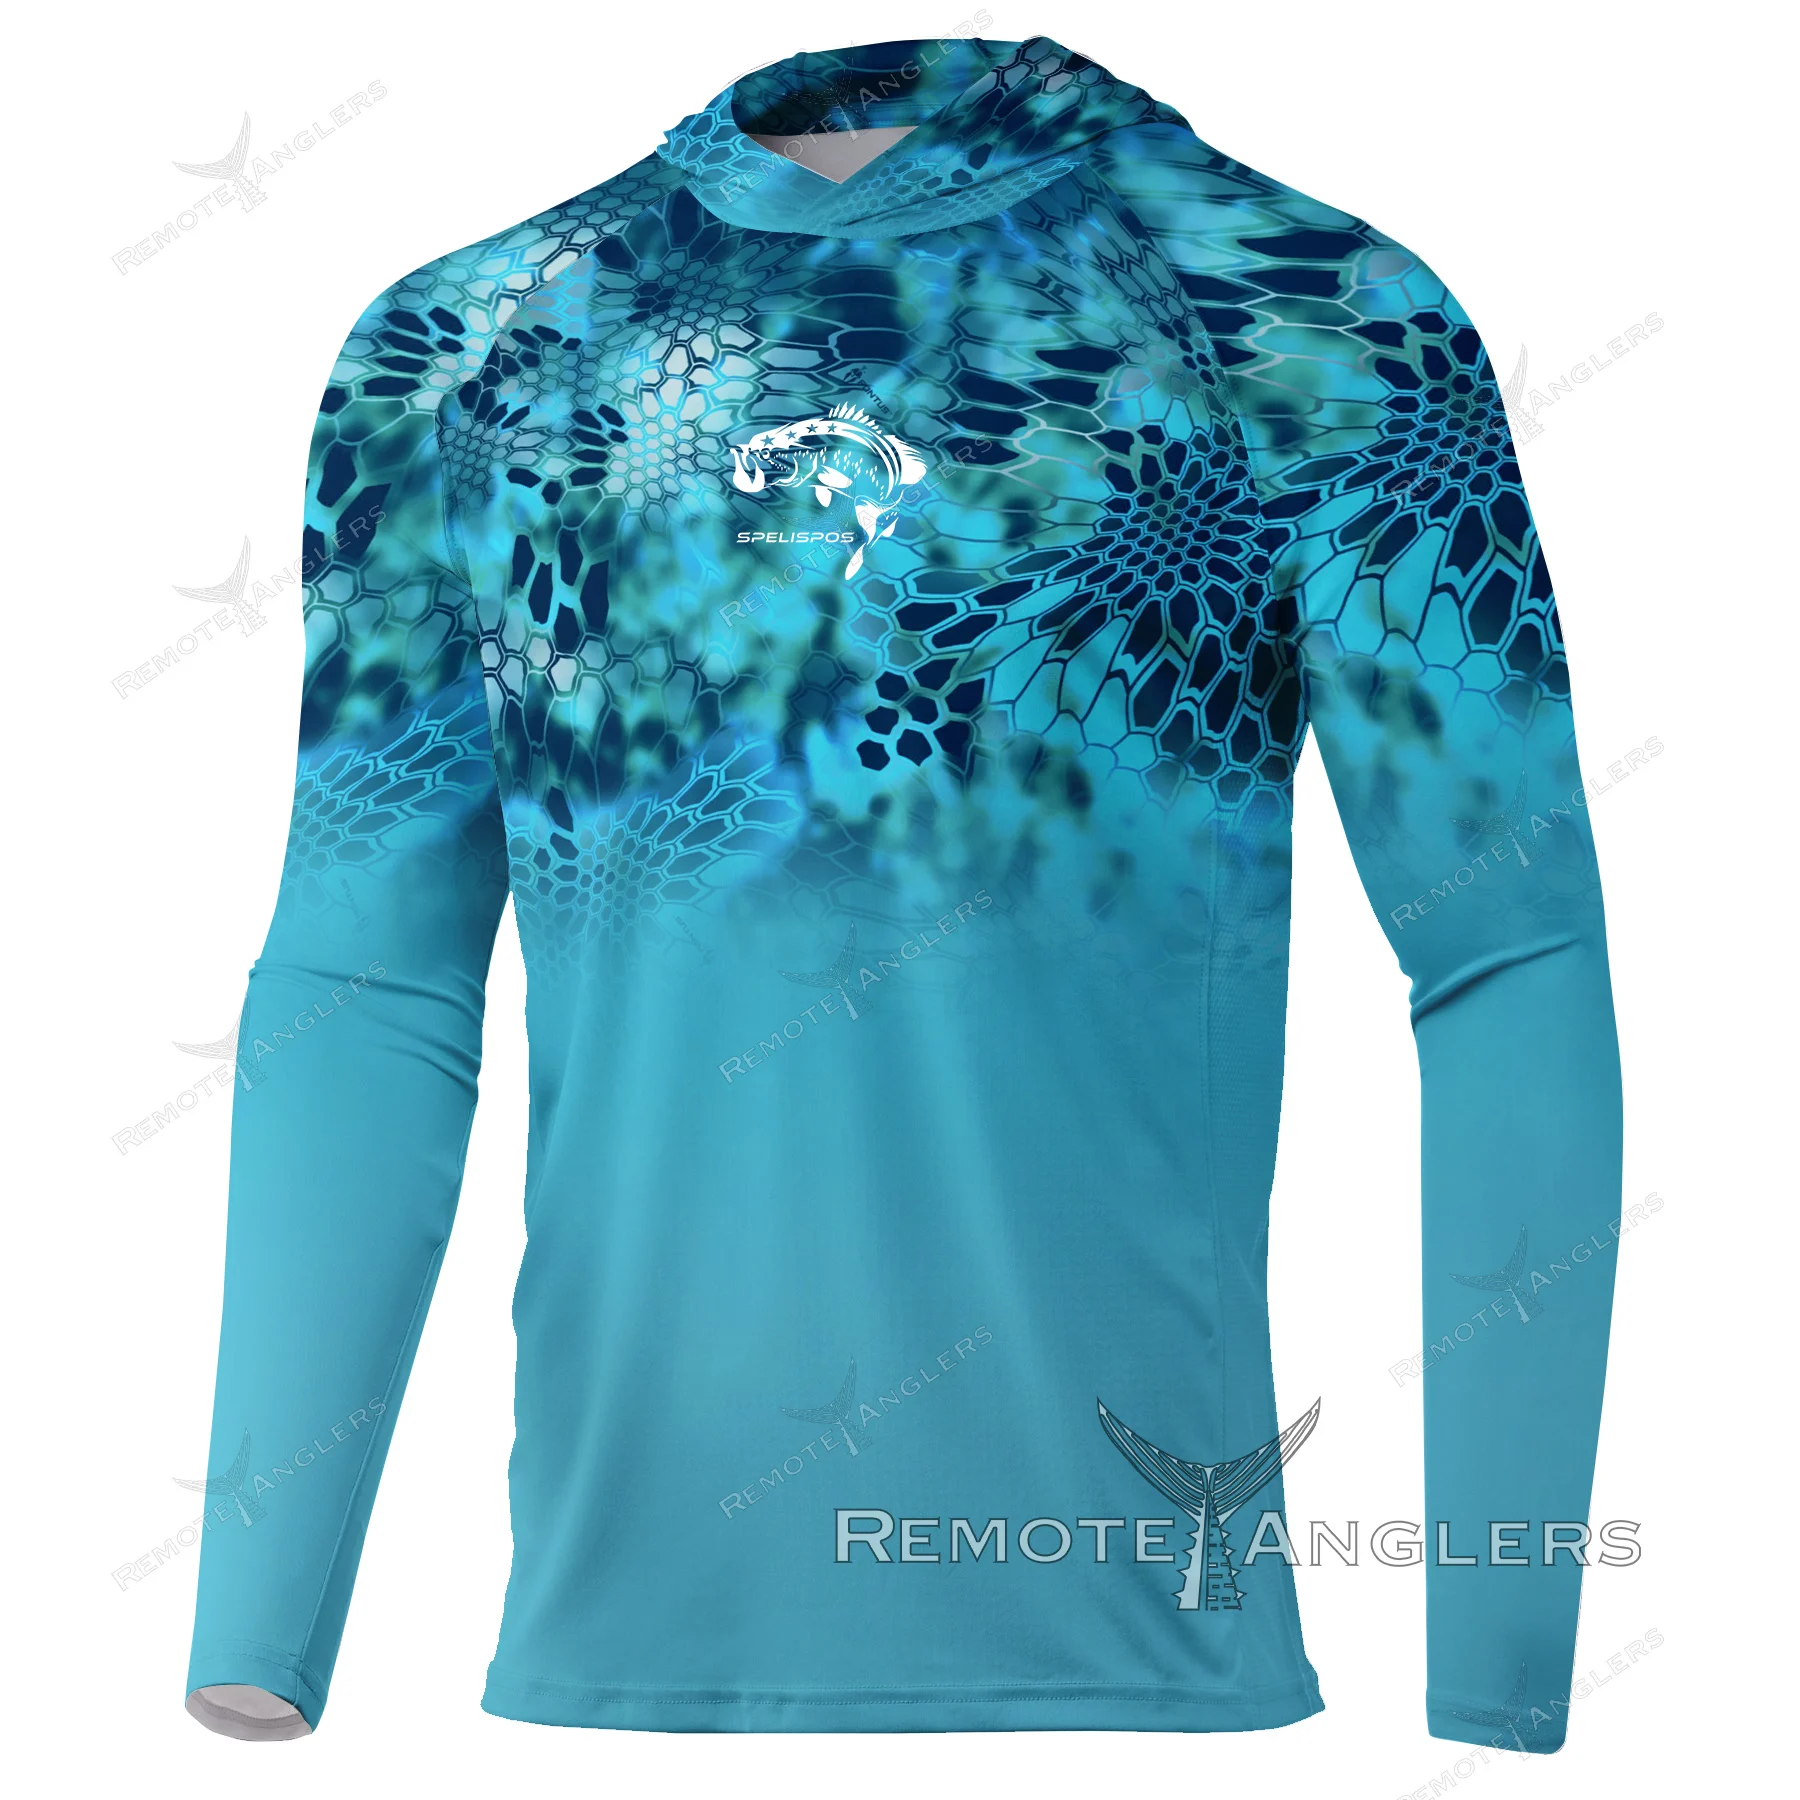 

SPELISPOS Camiseta De Pesca Men's Long Sleeve Fishing Jersey Tops Performance Shirts Sun UV Protection Fishing Hoodies Clothing